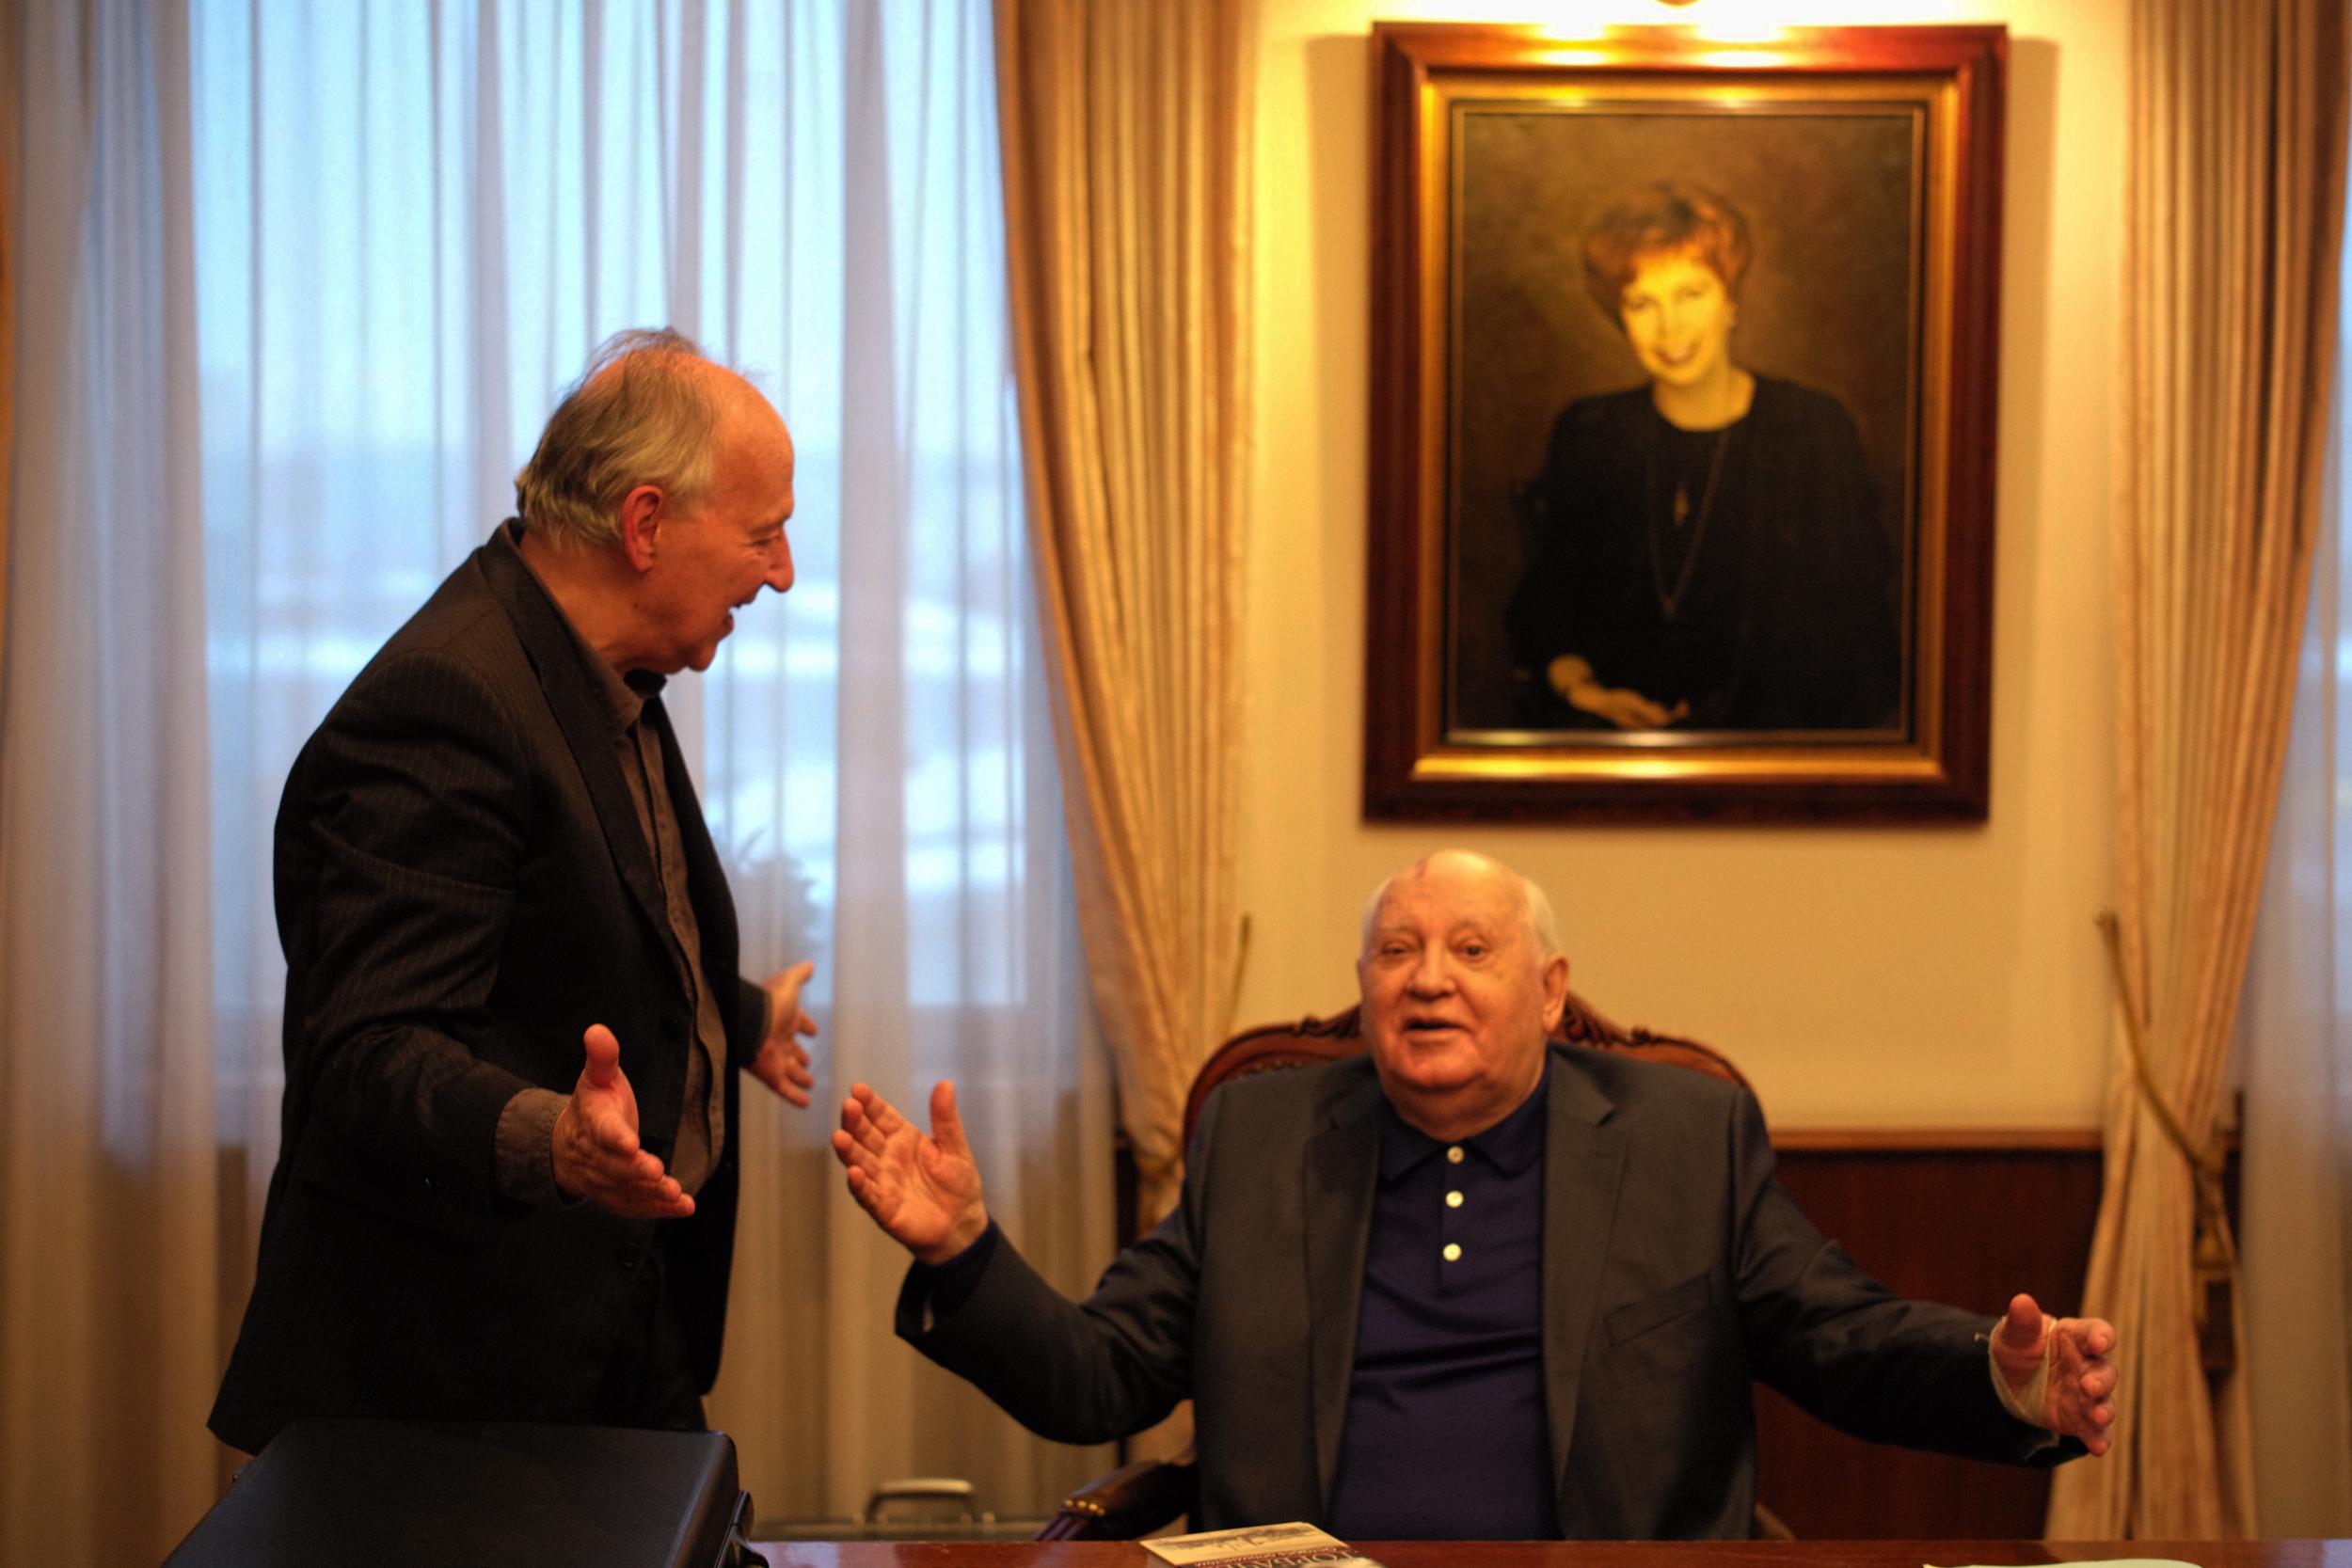 Herzog interviews the former Soviet leader in his documentary ‘Meeting Gorbachev’